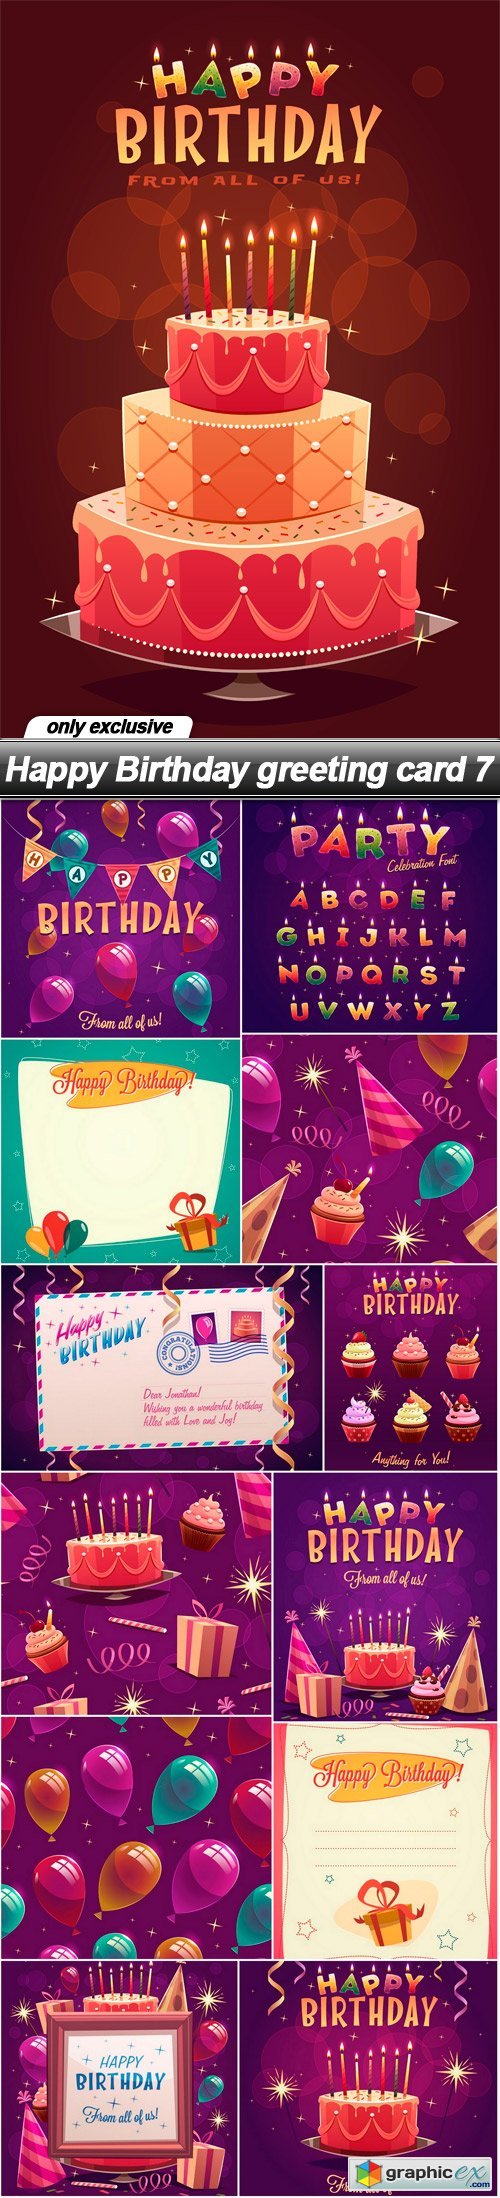 Happy Birthday greeting card 7 - 13 EPS